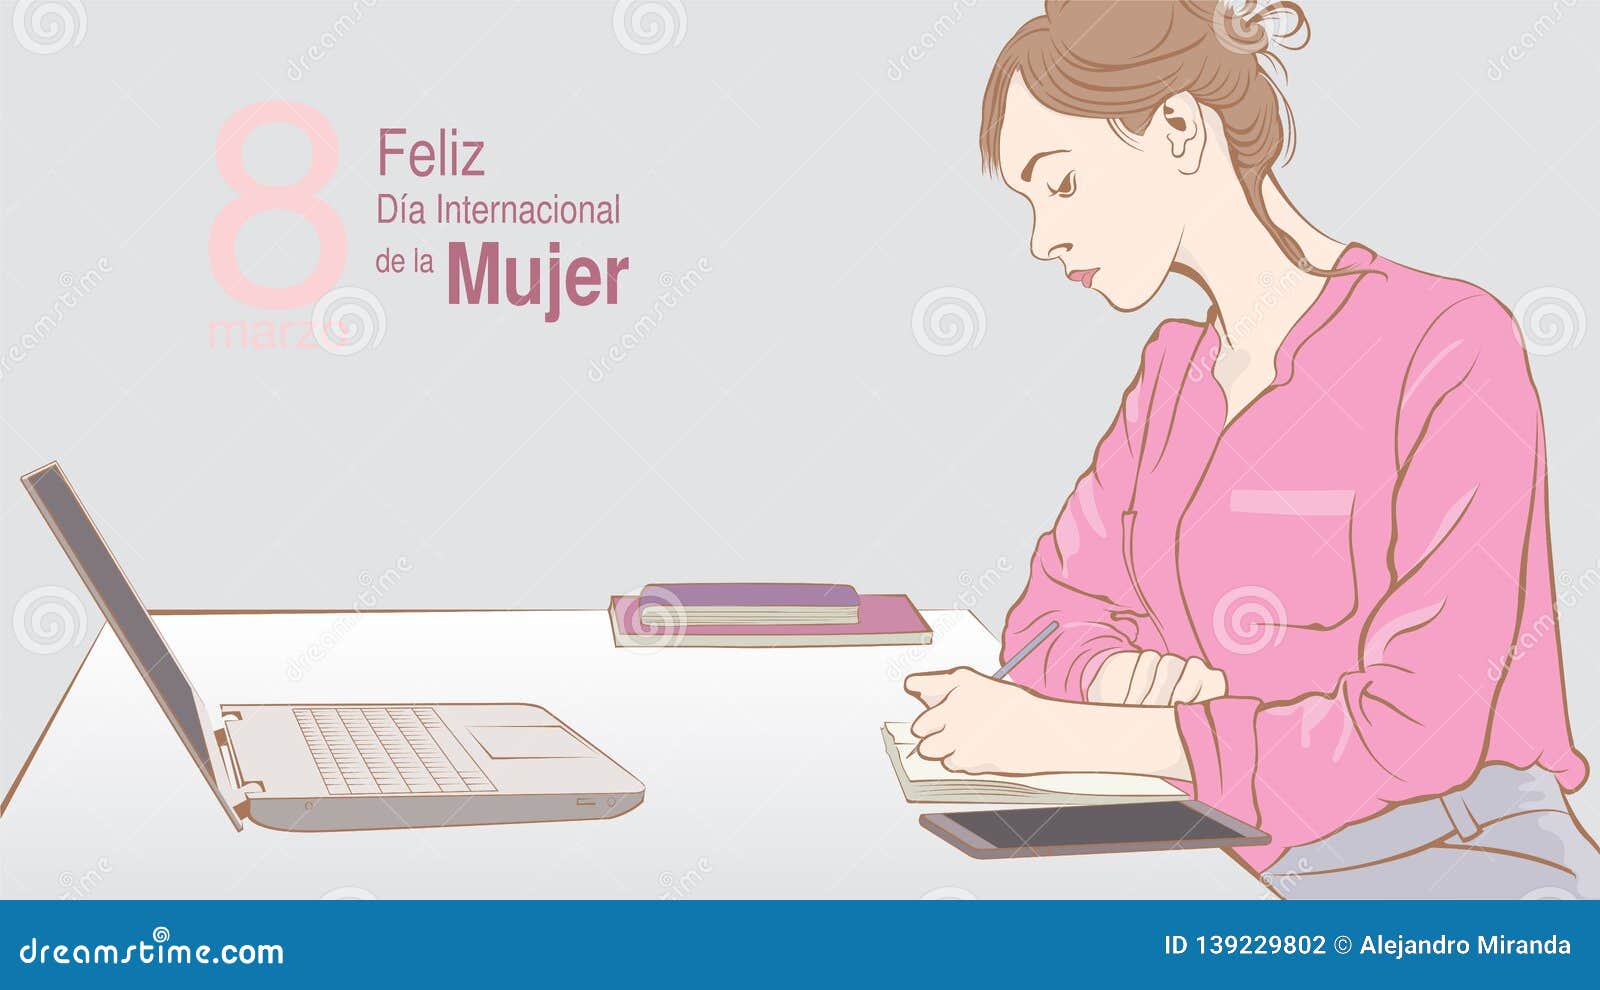 greeting card of dia international de la mujer - international women s day in spanish language. sketch of sitting female